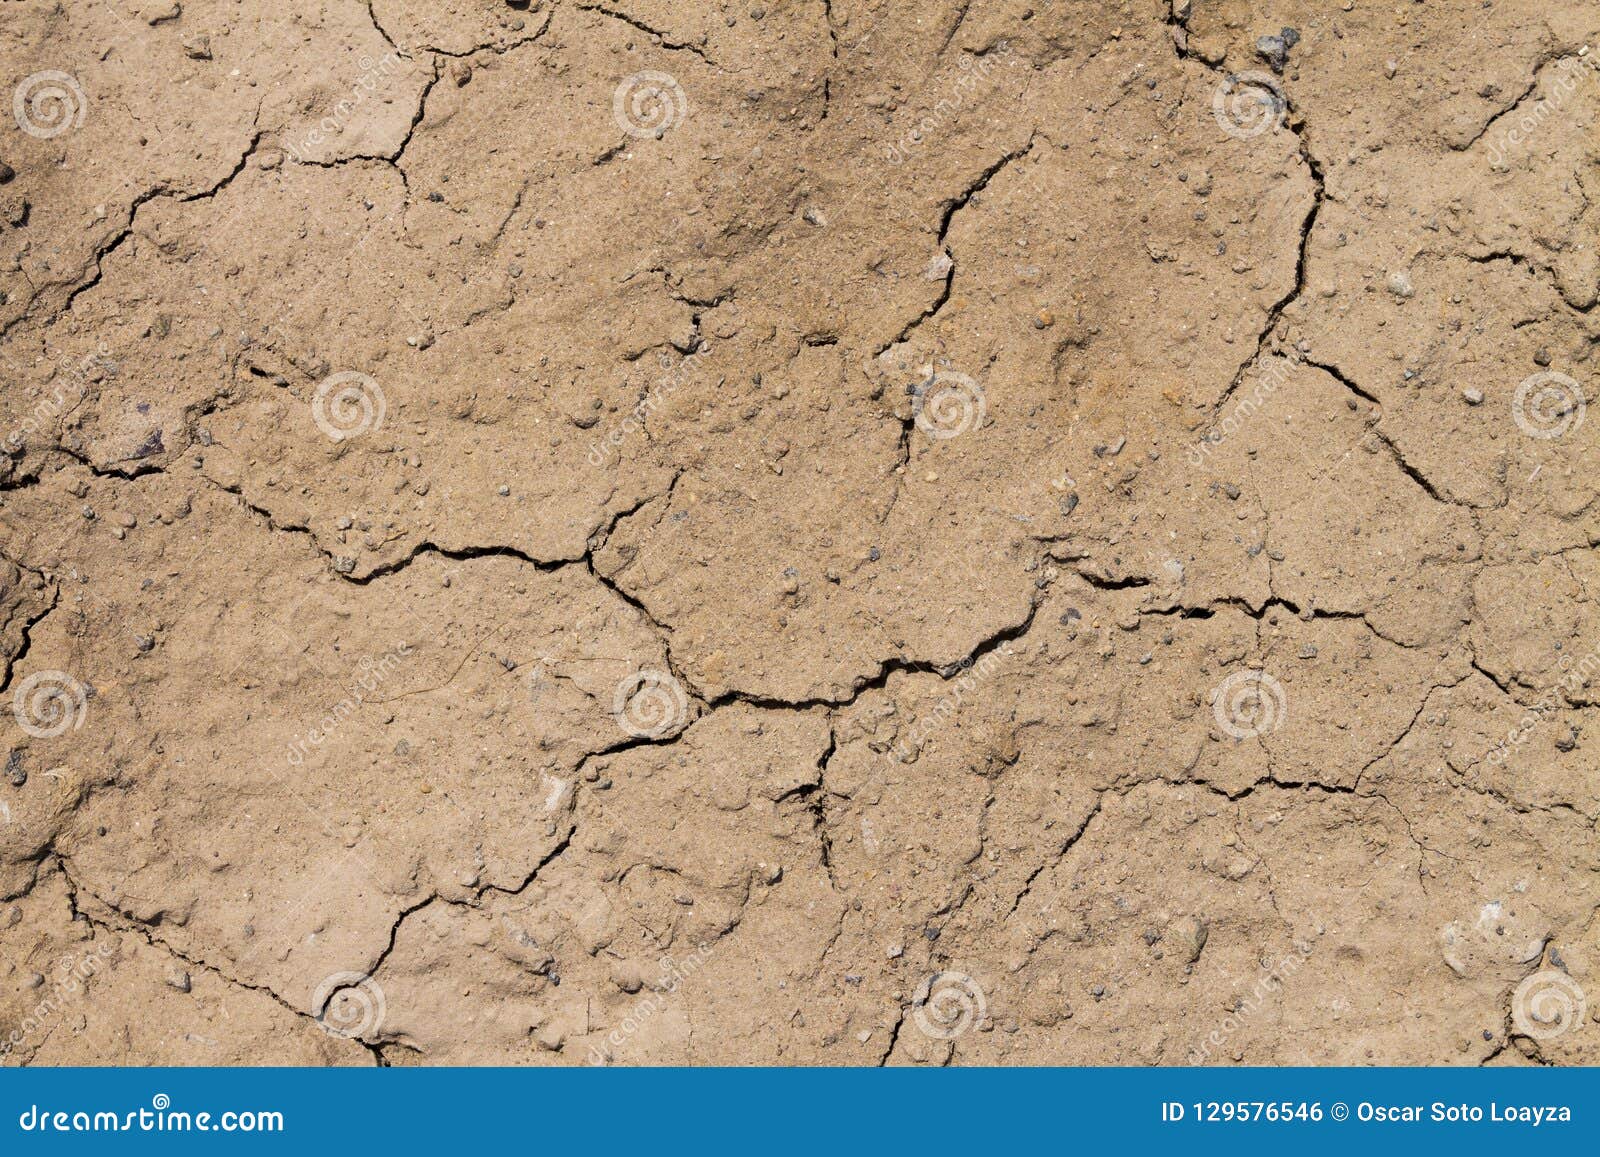 arid soil with cracks and desert look heart background